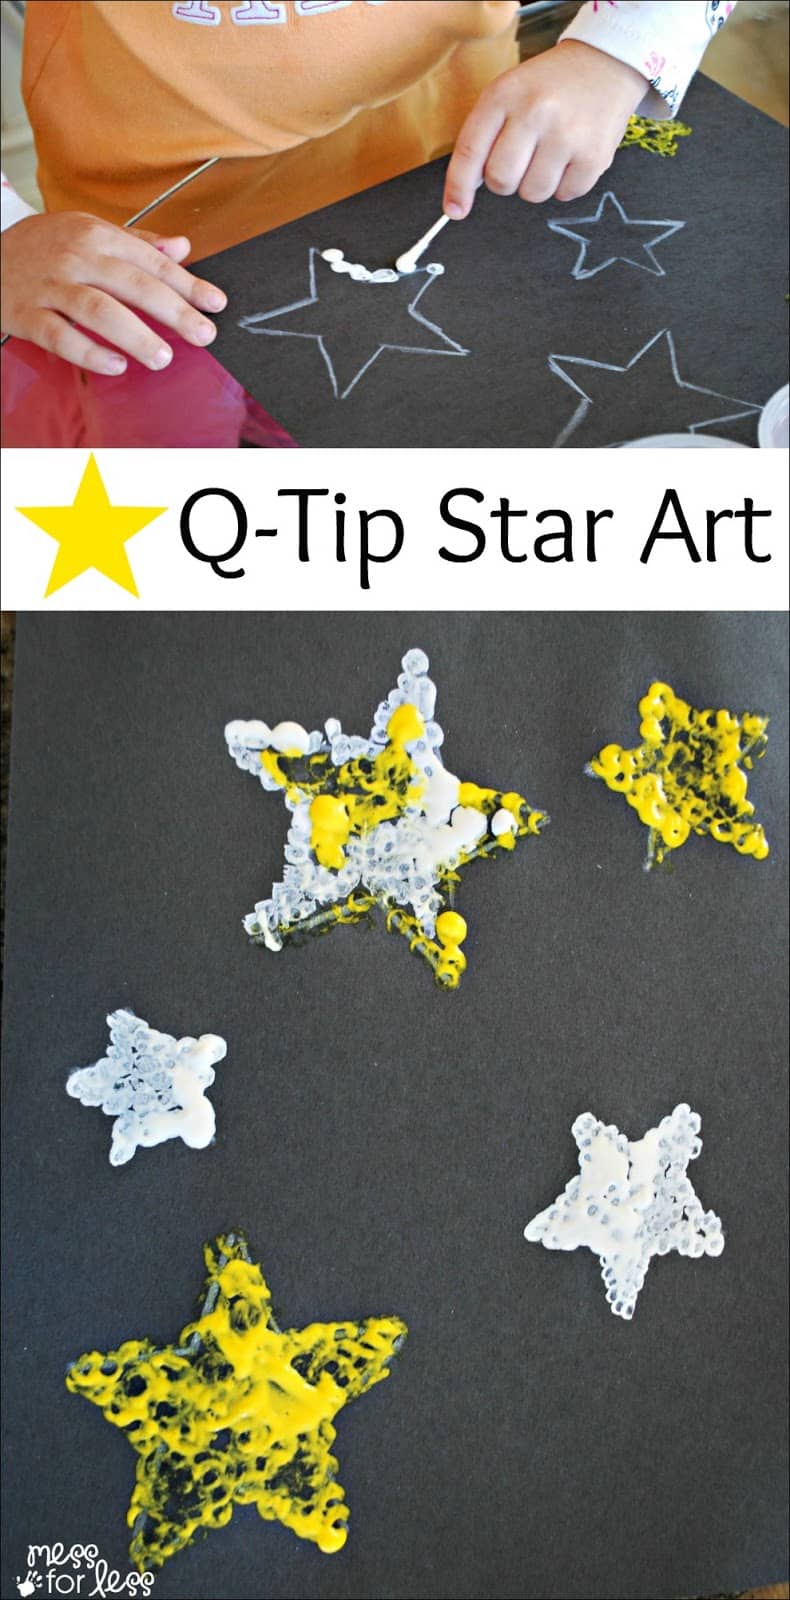 Kids Art Project QTip Star Art Mess for Less